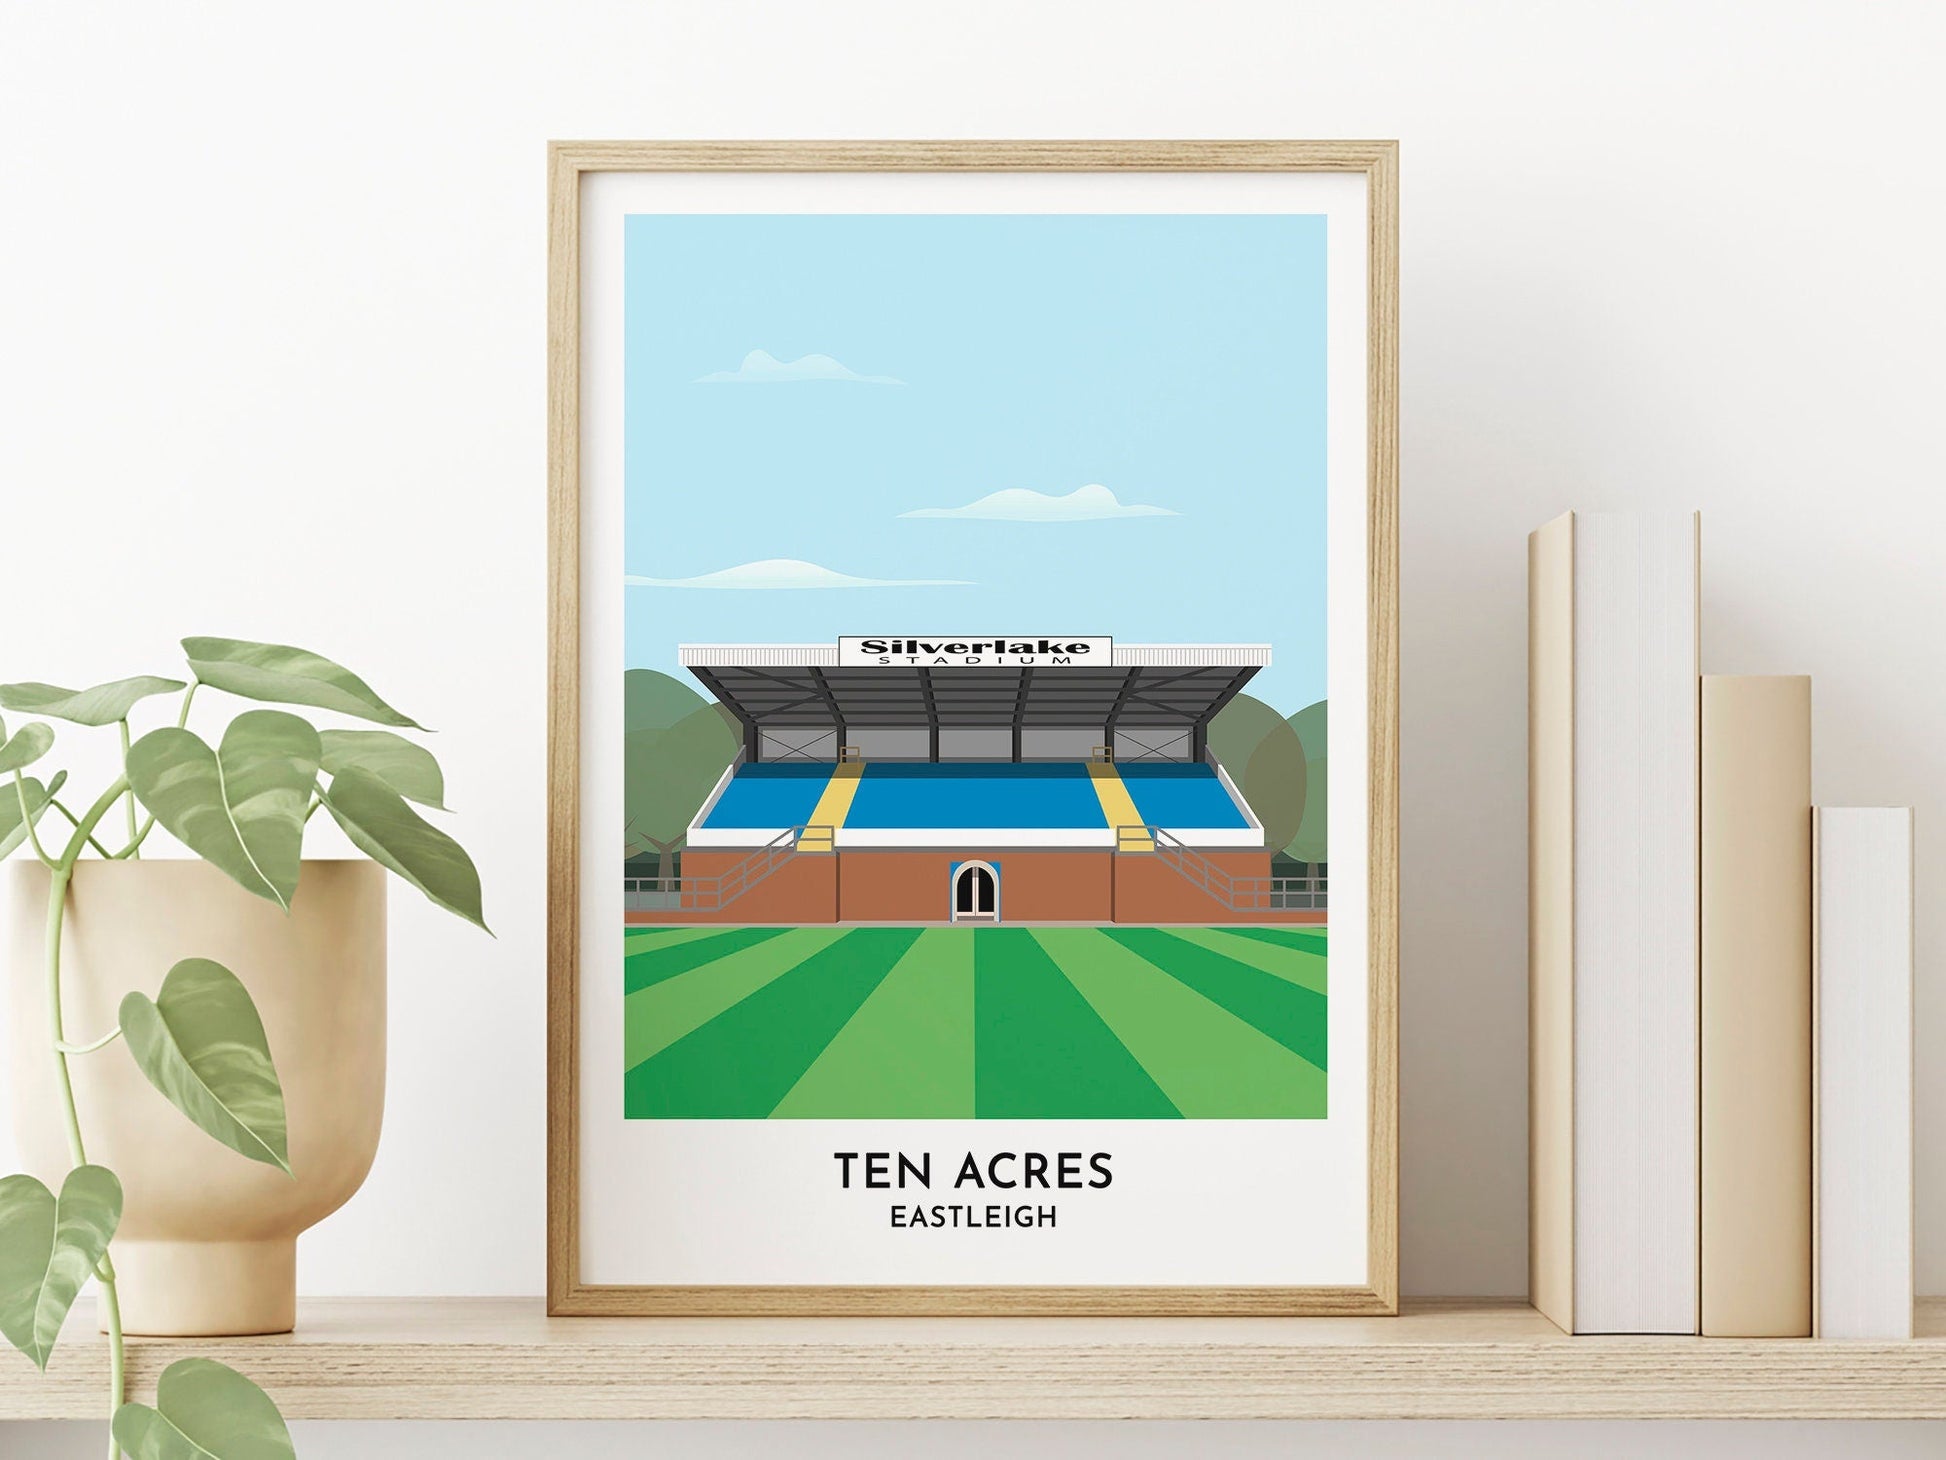 Eastleigh Football Stadium Poster, Illustration of Ten Acres / Silverlake Stadium, Football Fan Presents for Her or Him - Turf Football Art